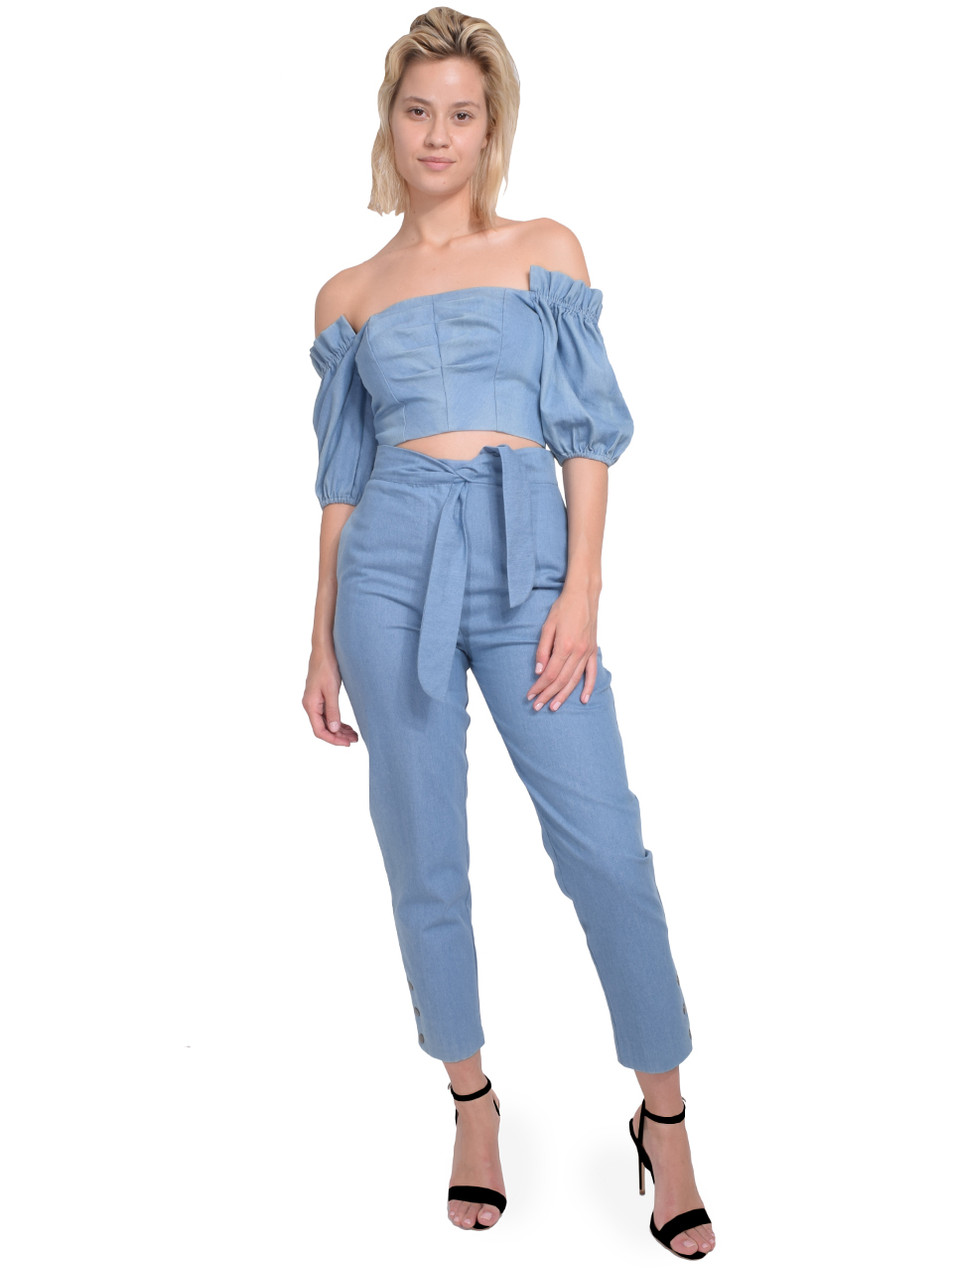 Karina Grimaldi Collection, Shop Online | Bleu Clothing